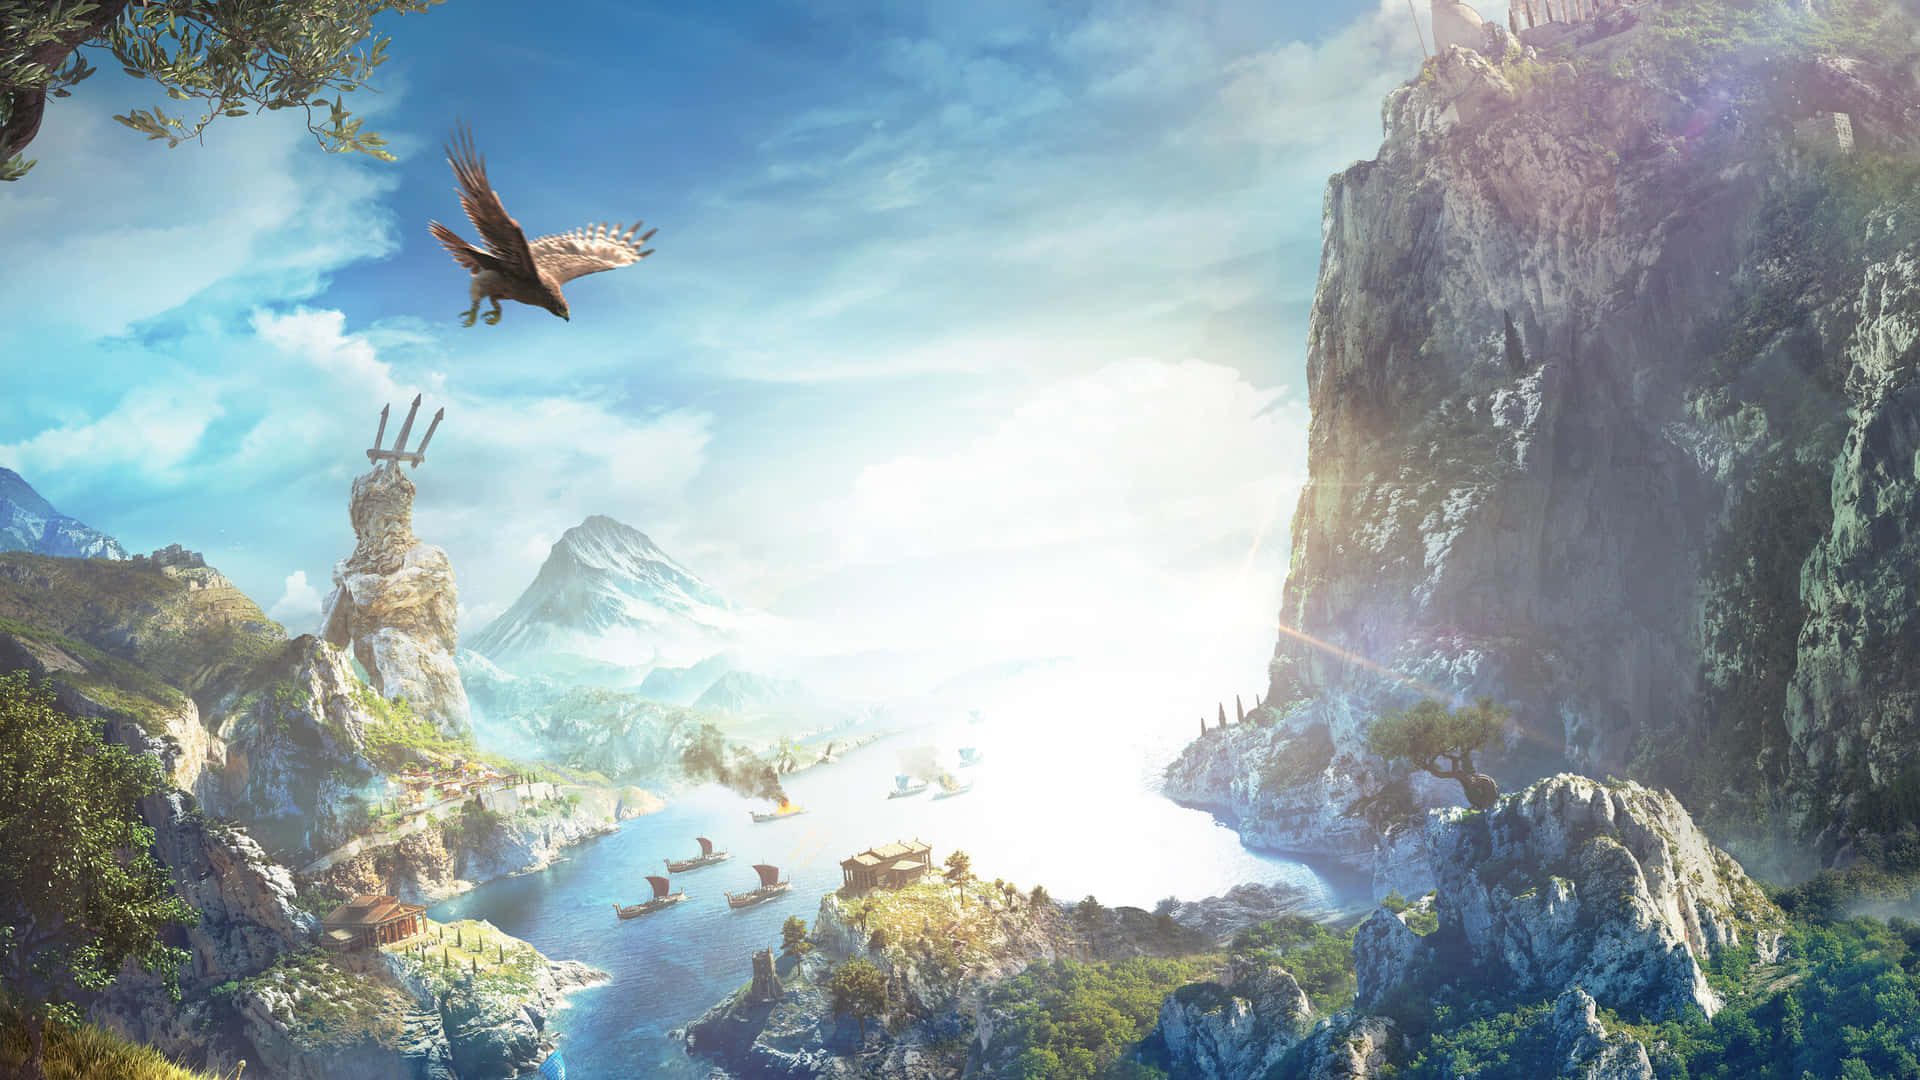 Eagle 1440p Assassin's Creed Odyssey Background For Desktop